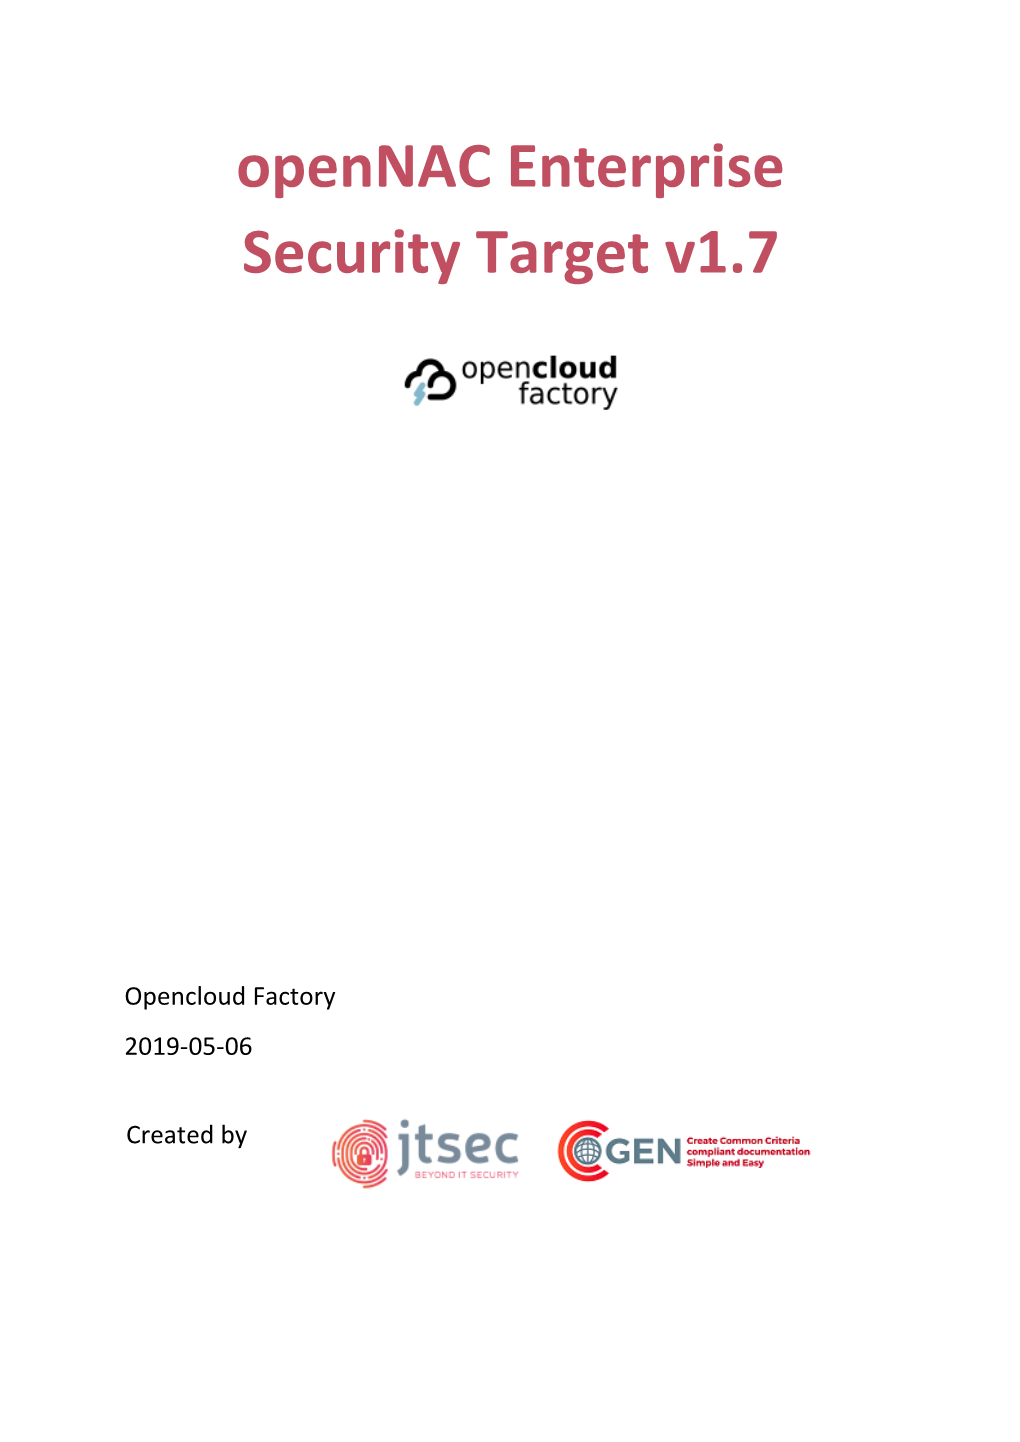 Opennac Enterprise Security Target V1.7 - 2 - 4.3.2 Organizational Security Policies